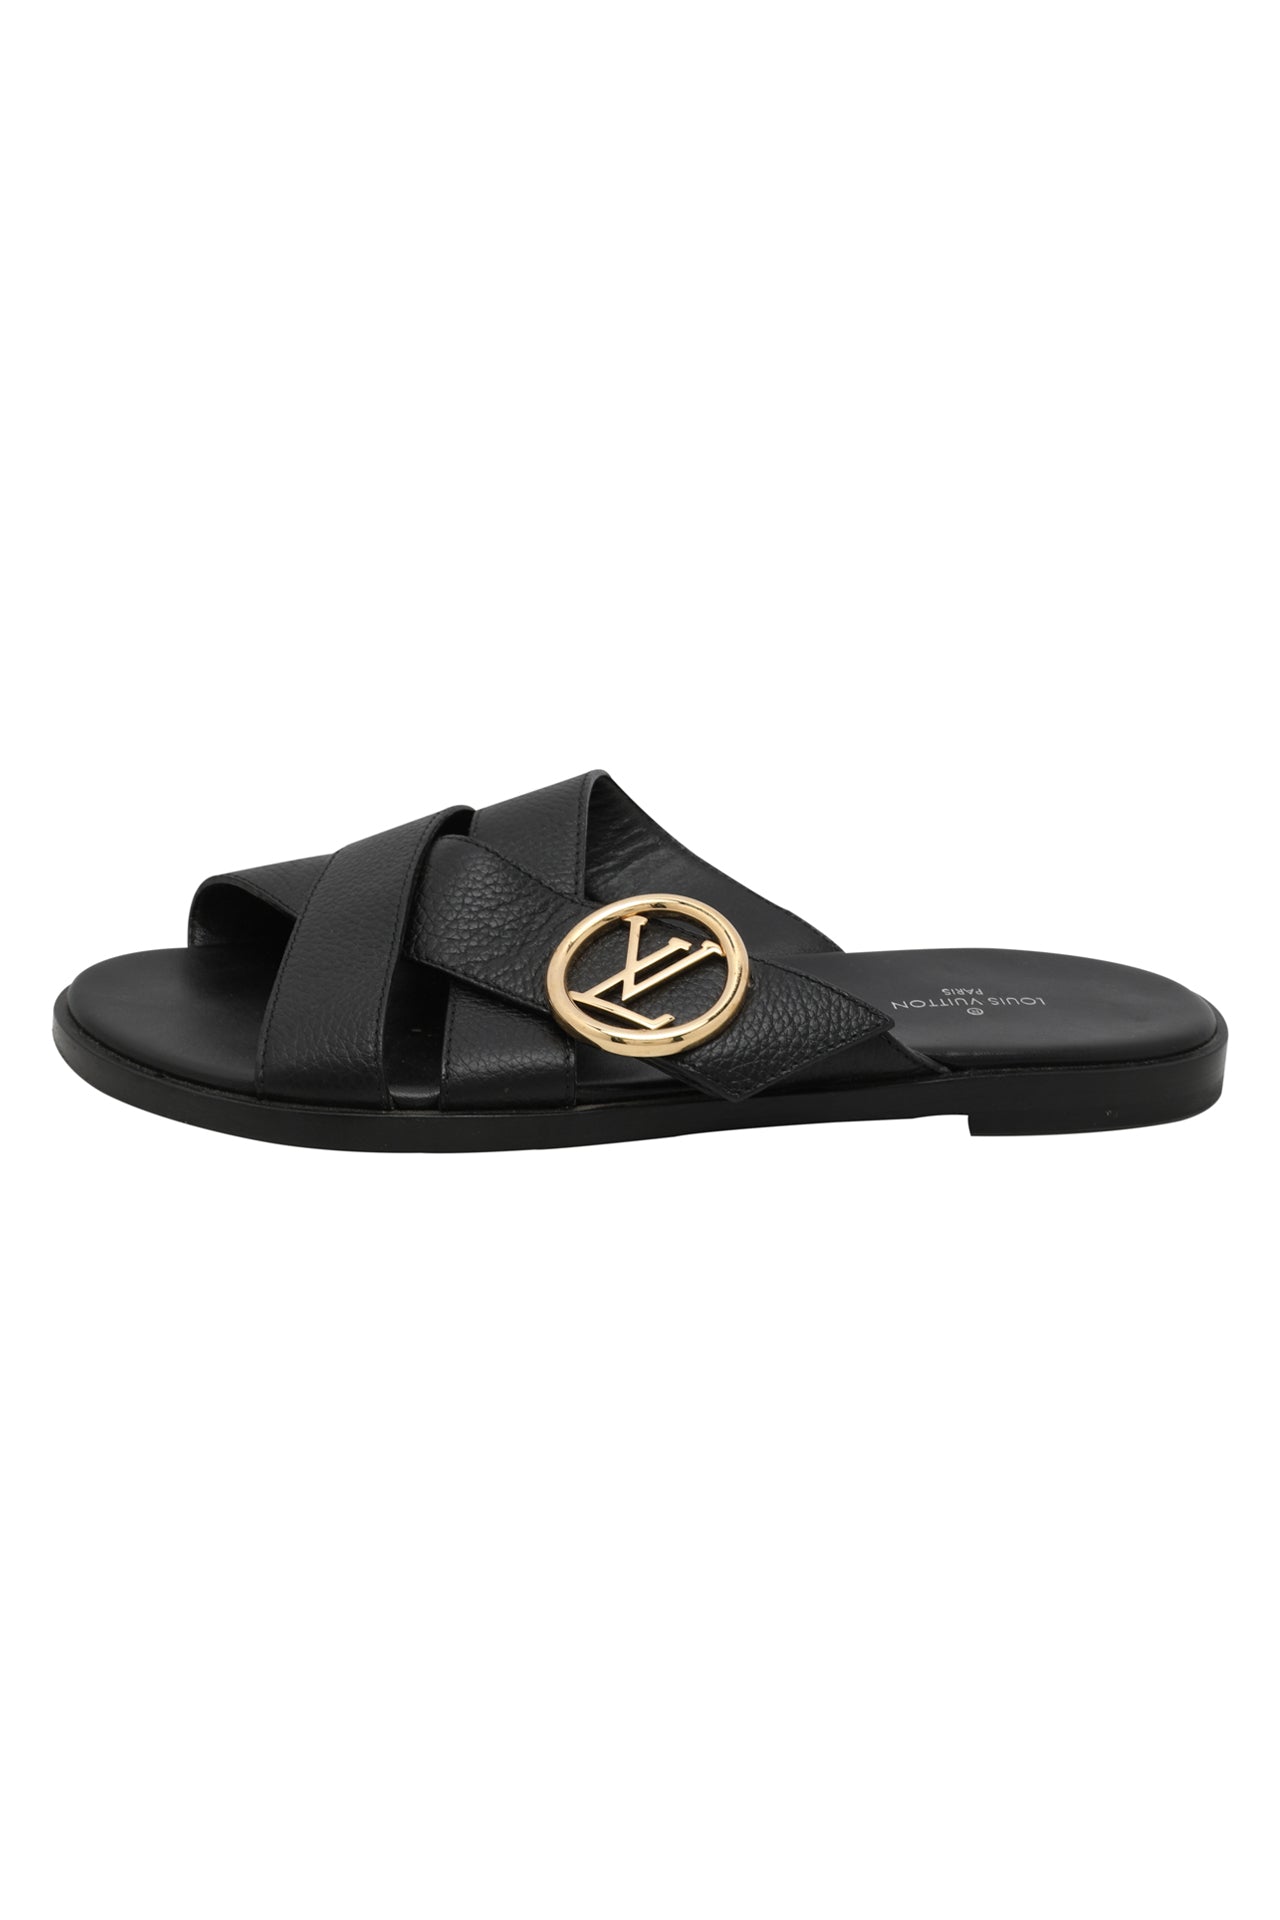 Louis Vuitton Dark Brown Leather Logo Cross Strap Flat Slides Sandals Size  41 Louis Vuitton | The Luxury Closet